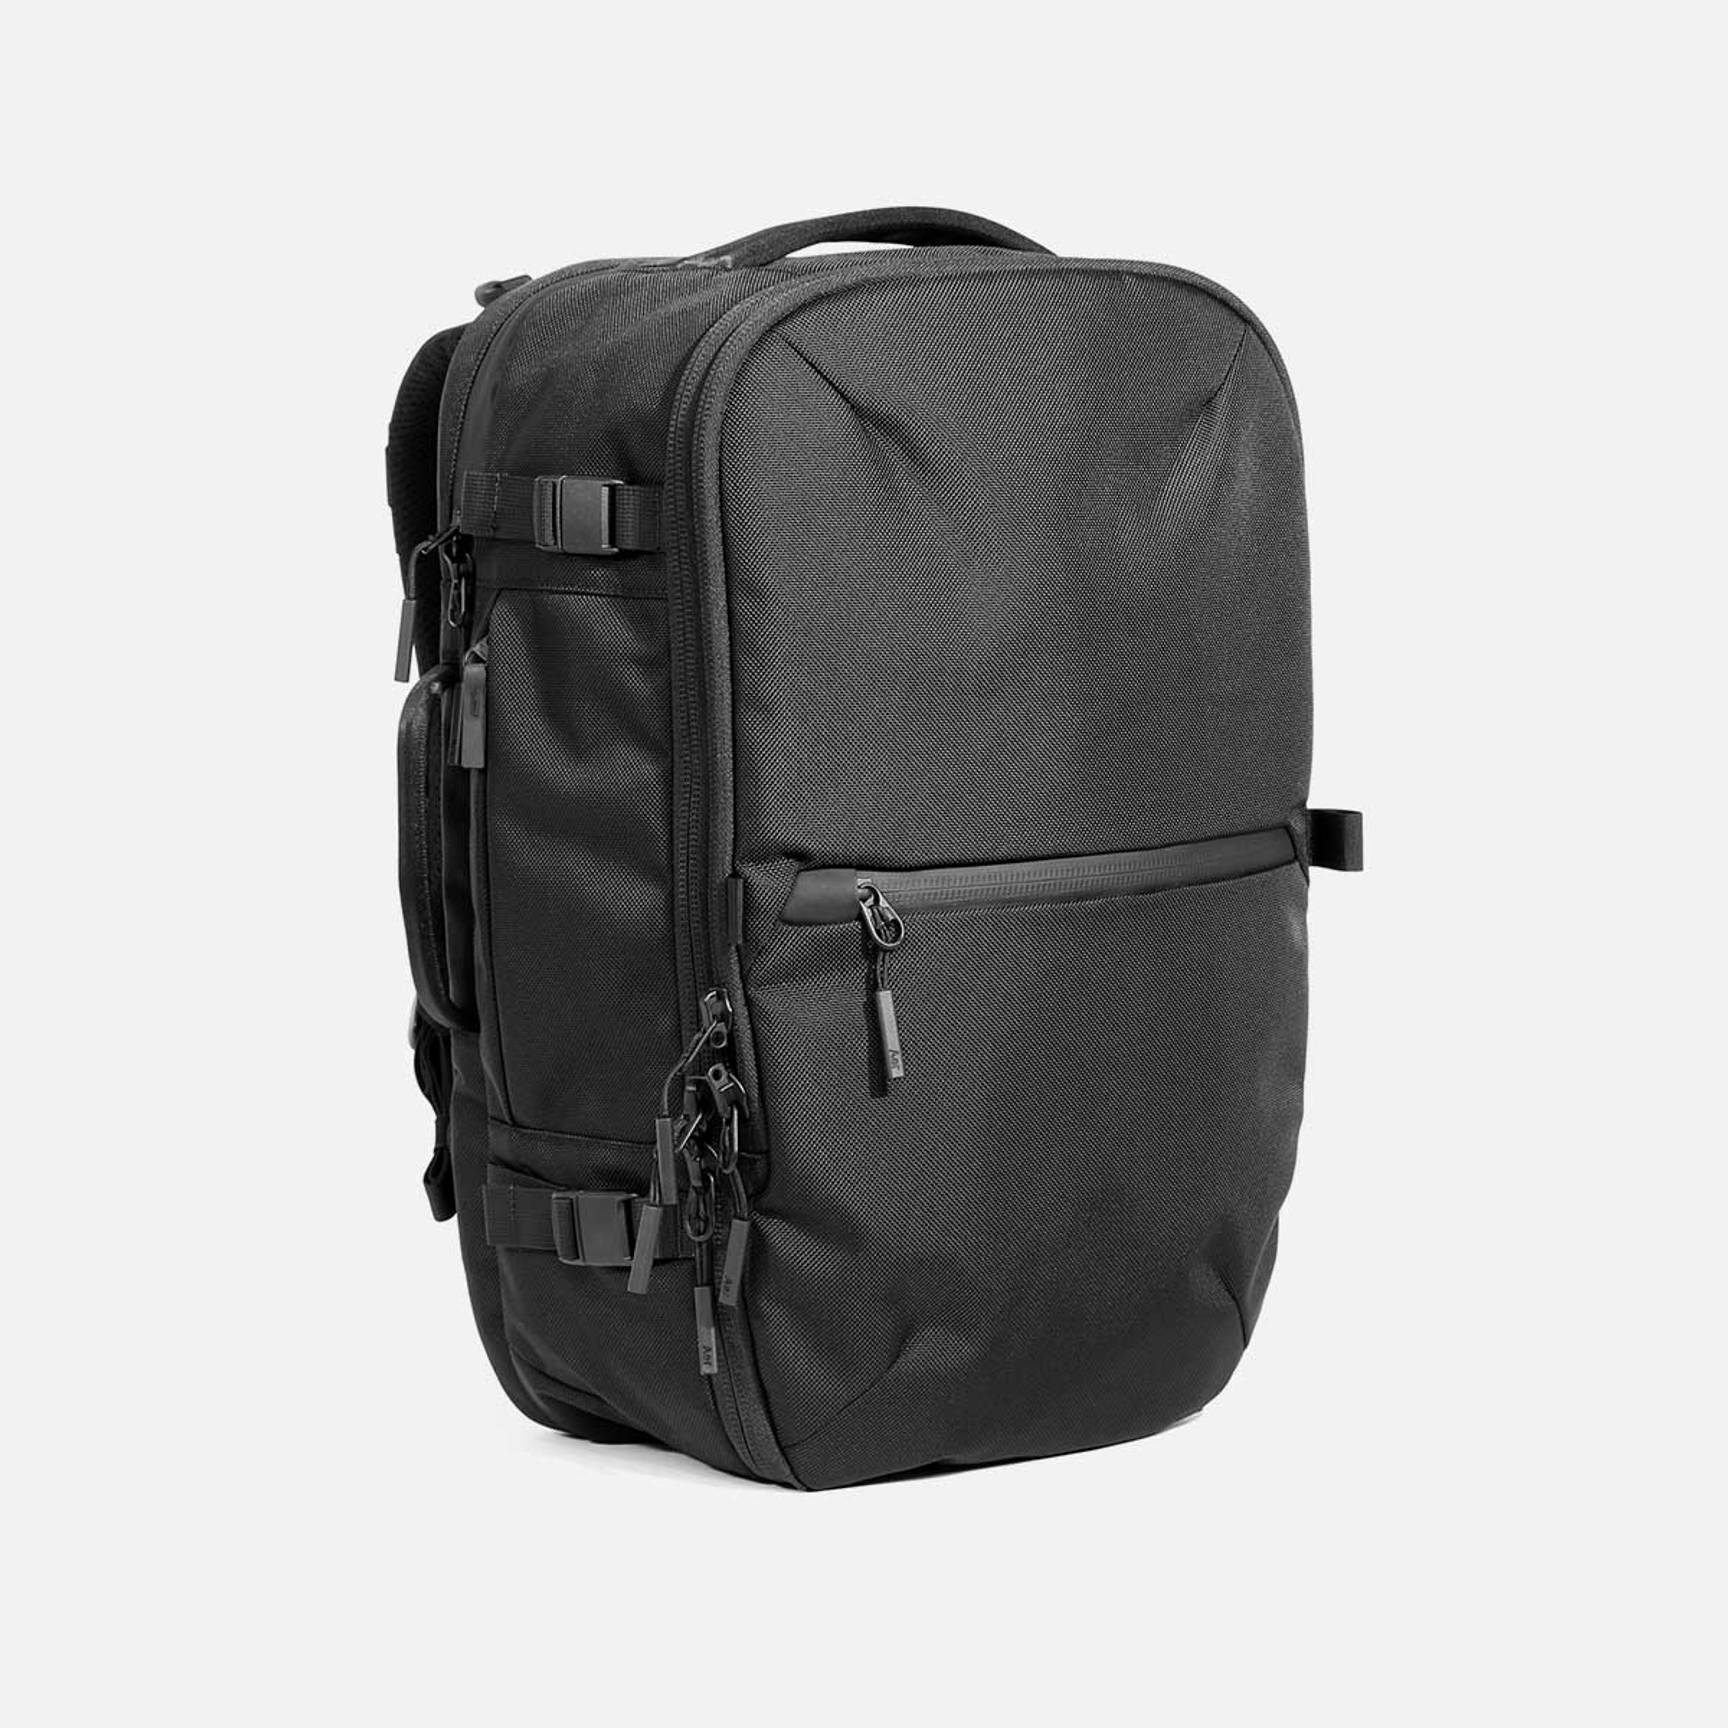 Acer 3-In-1 Laptop Backpack